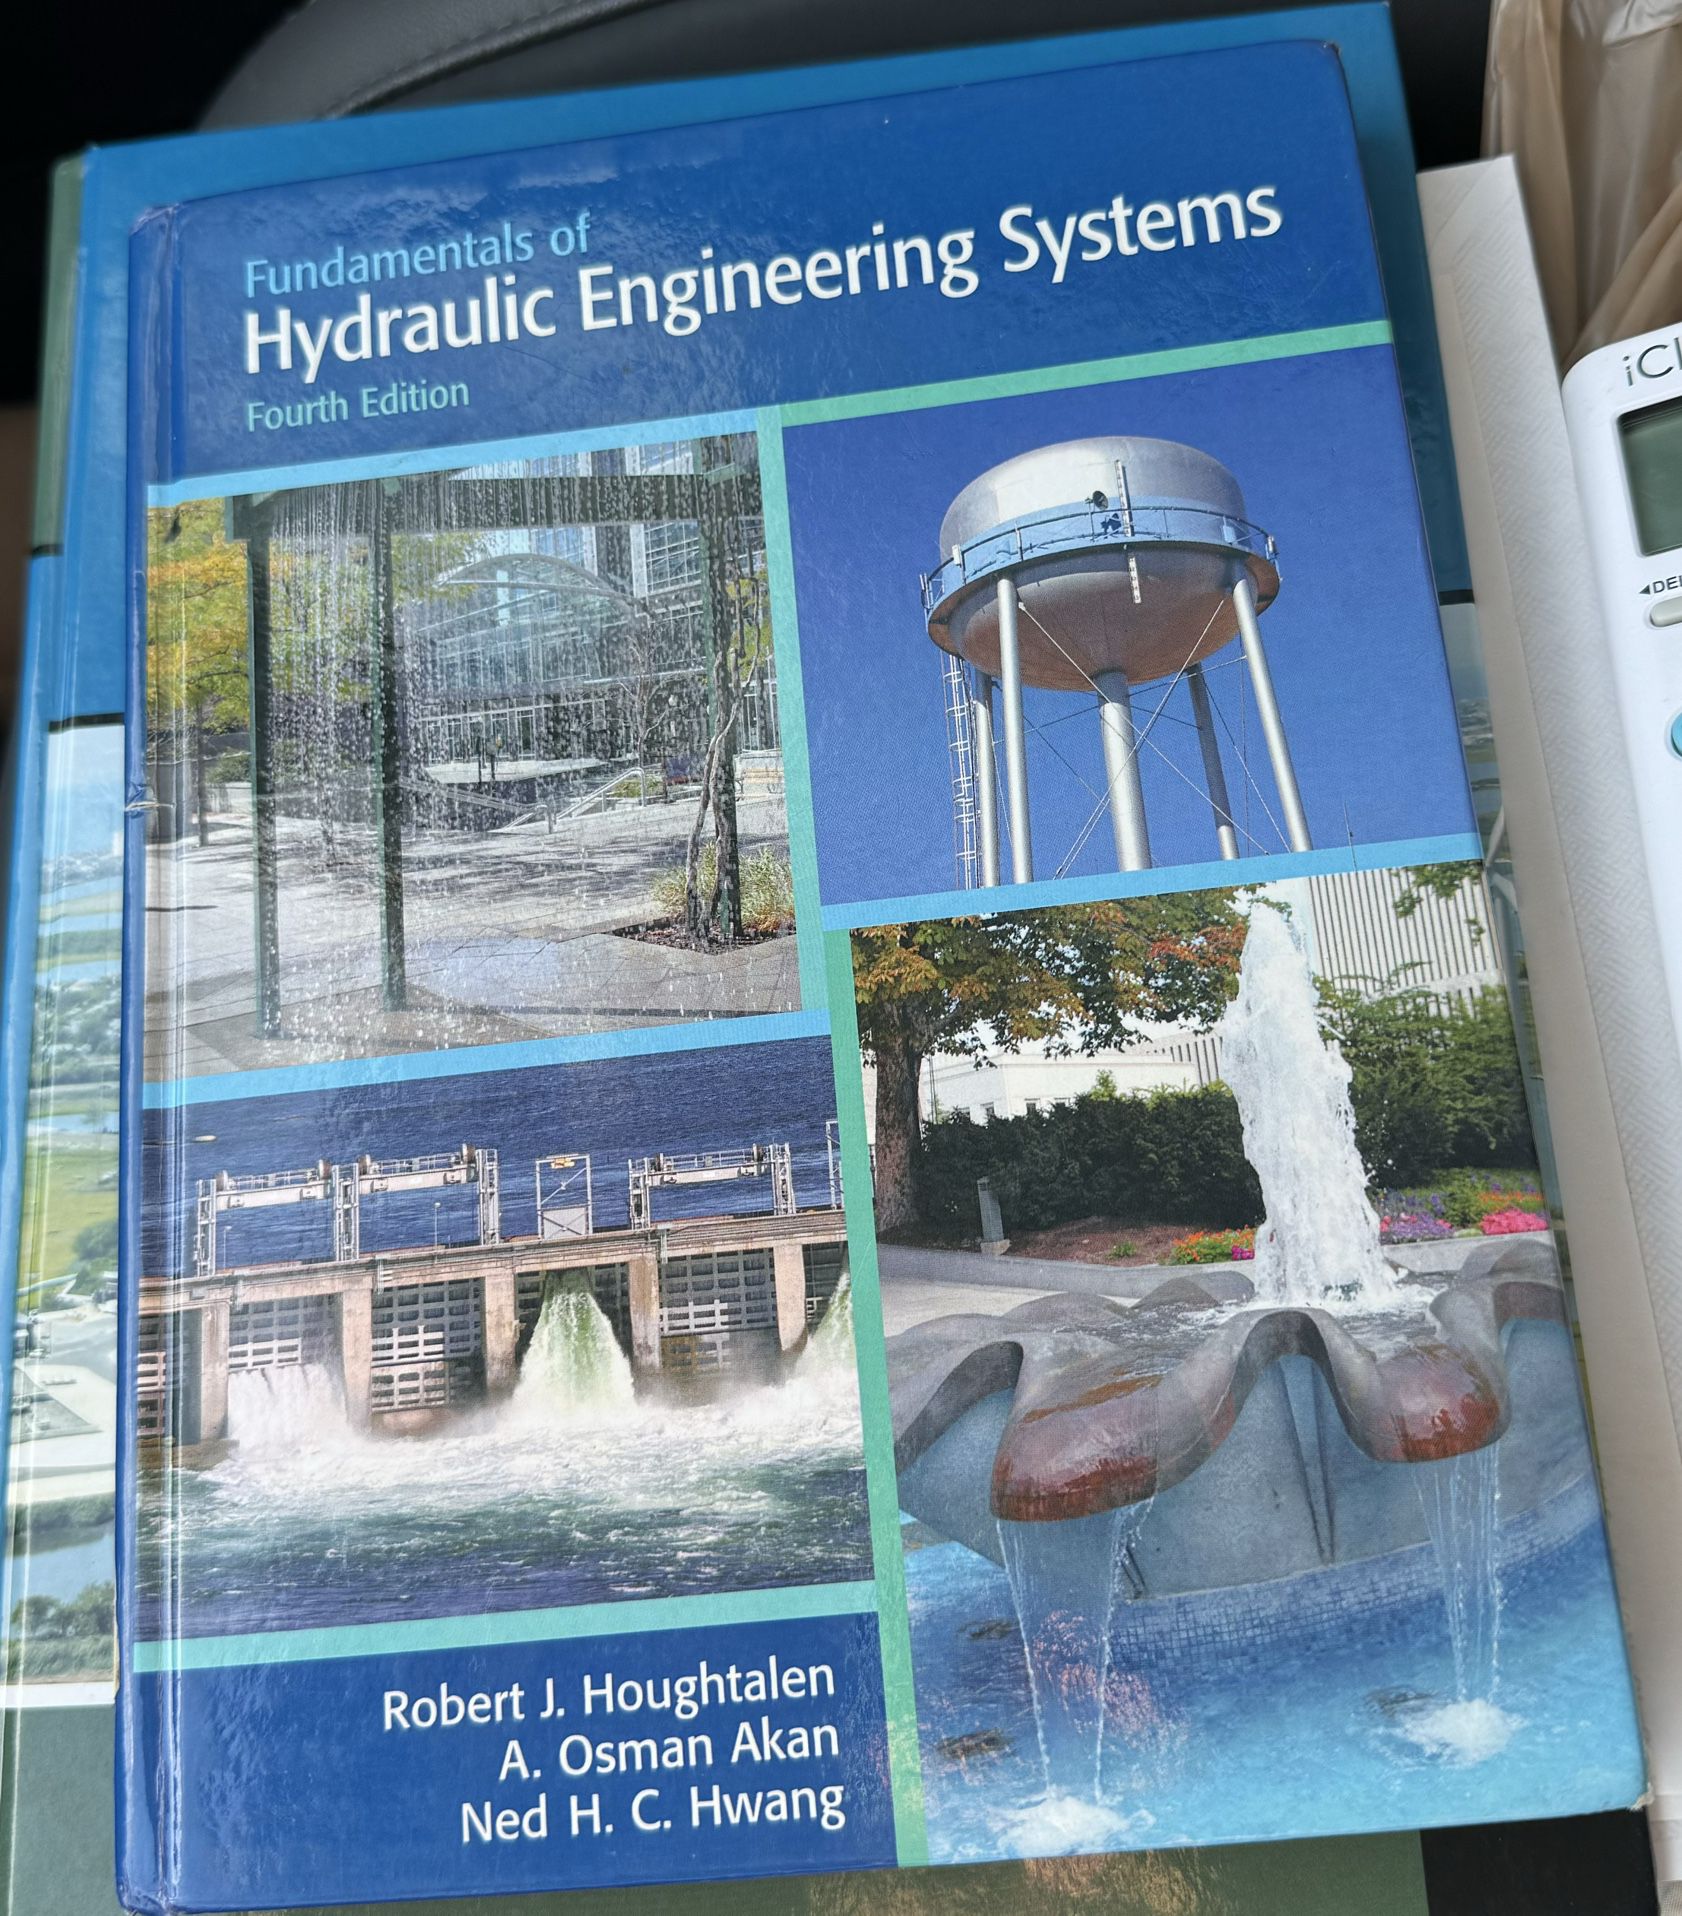 Fundamentals of Hydraulic Engineering Systems